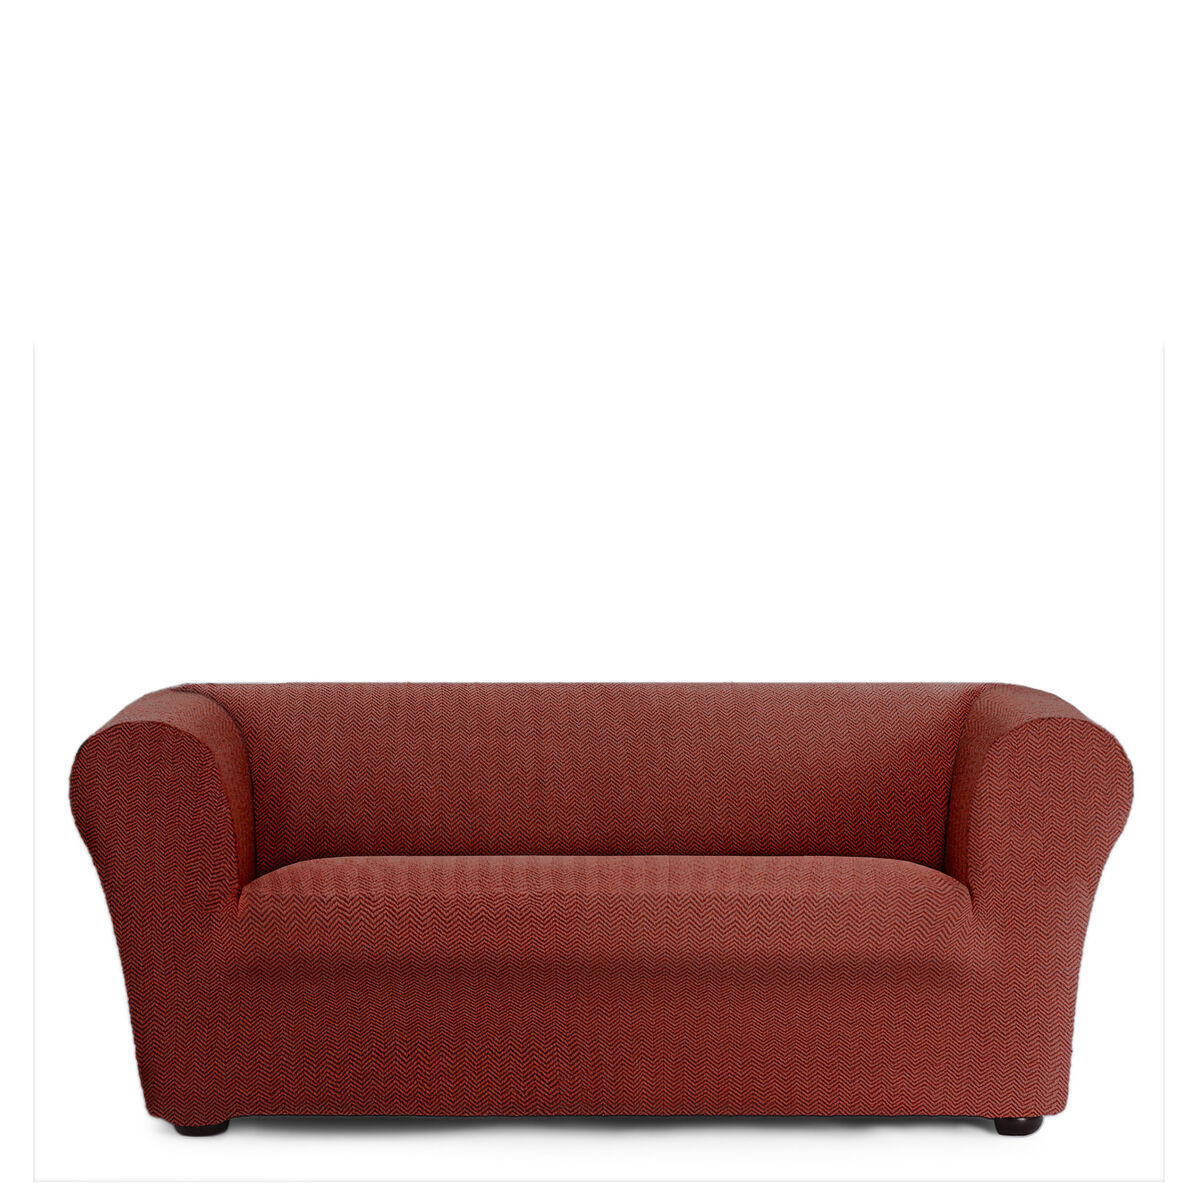 Copertina di divano marrone Eysa Jaz 110 x 100 x 180 cm